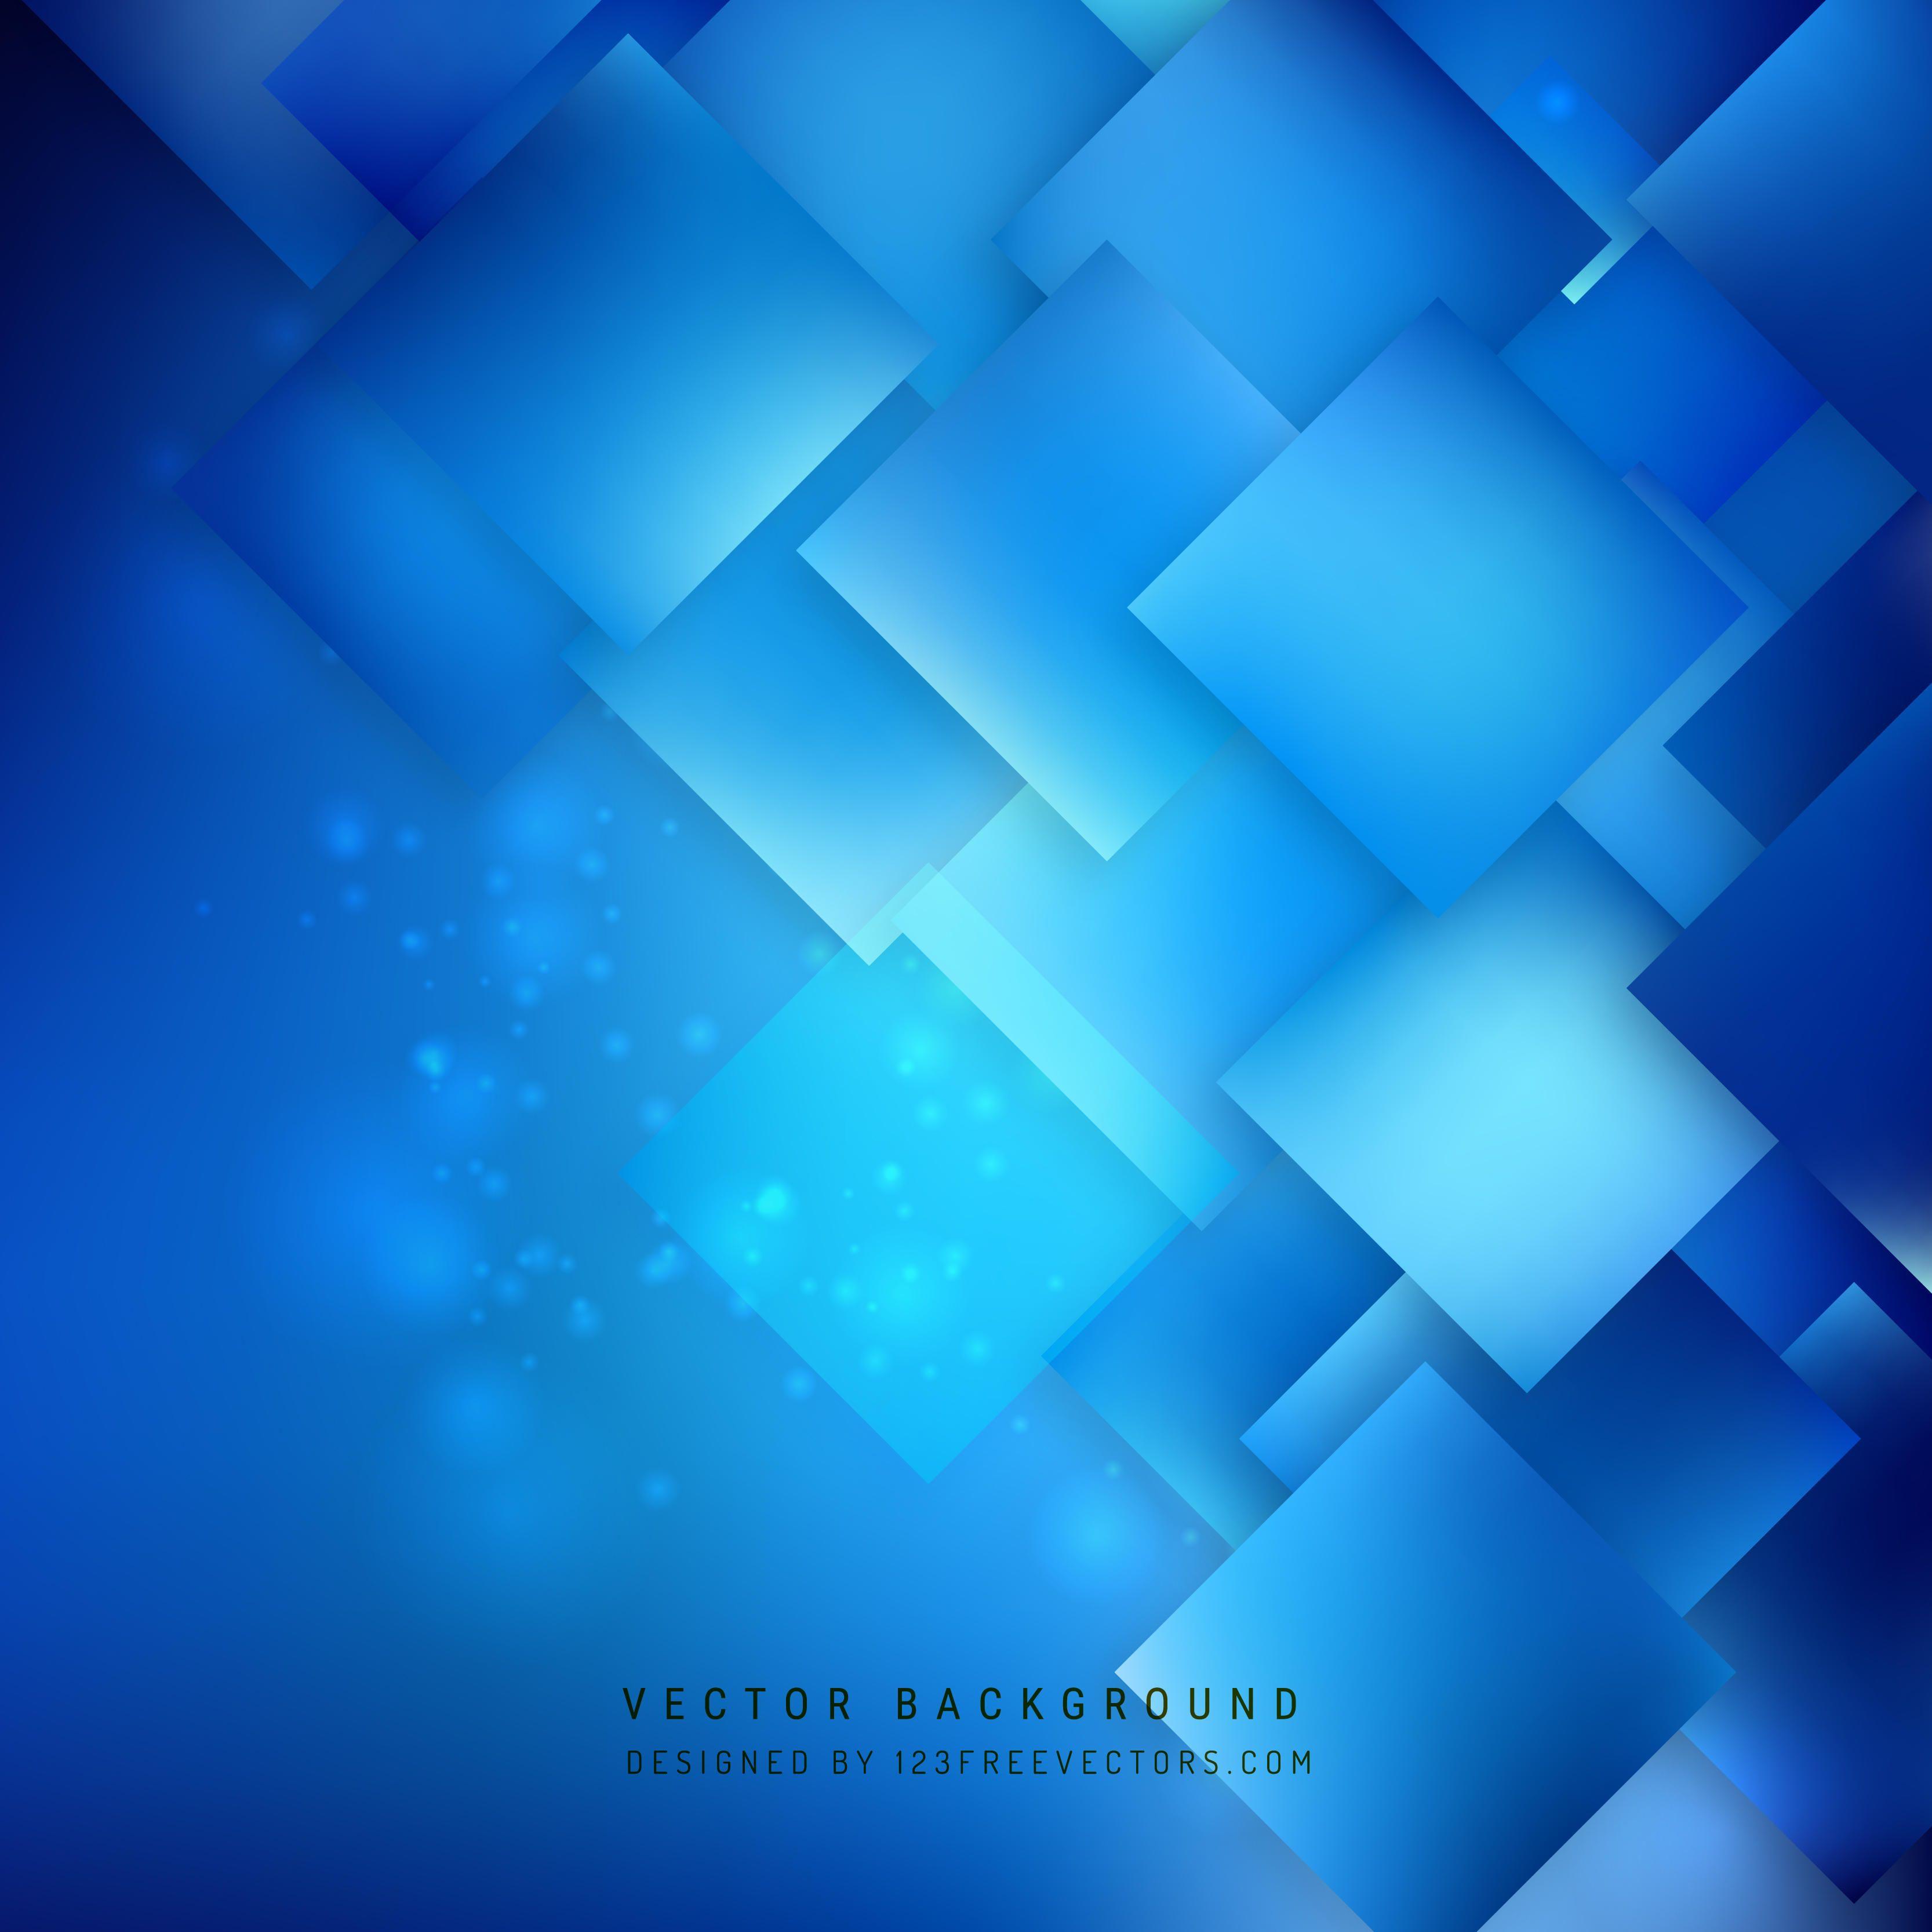 Blue Background Vectors. Download Free Vector Art & Graphics